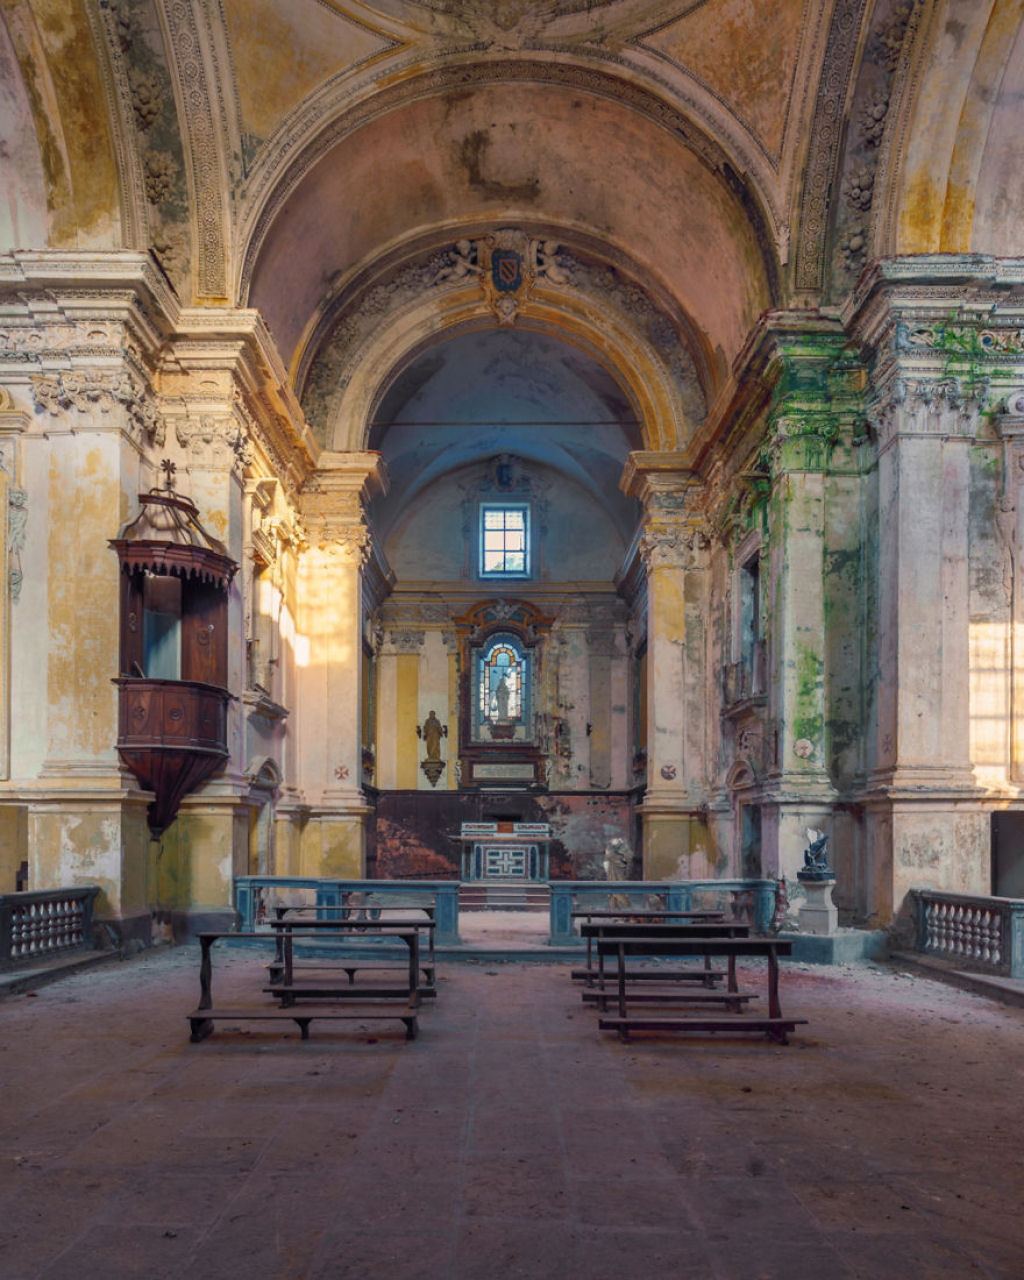 Fotos fantsticas mostram a declnio de igrejas abandonadas na Itlia 24